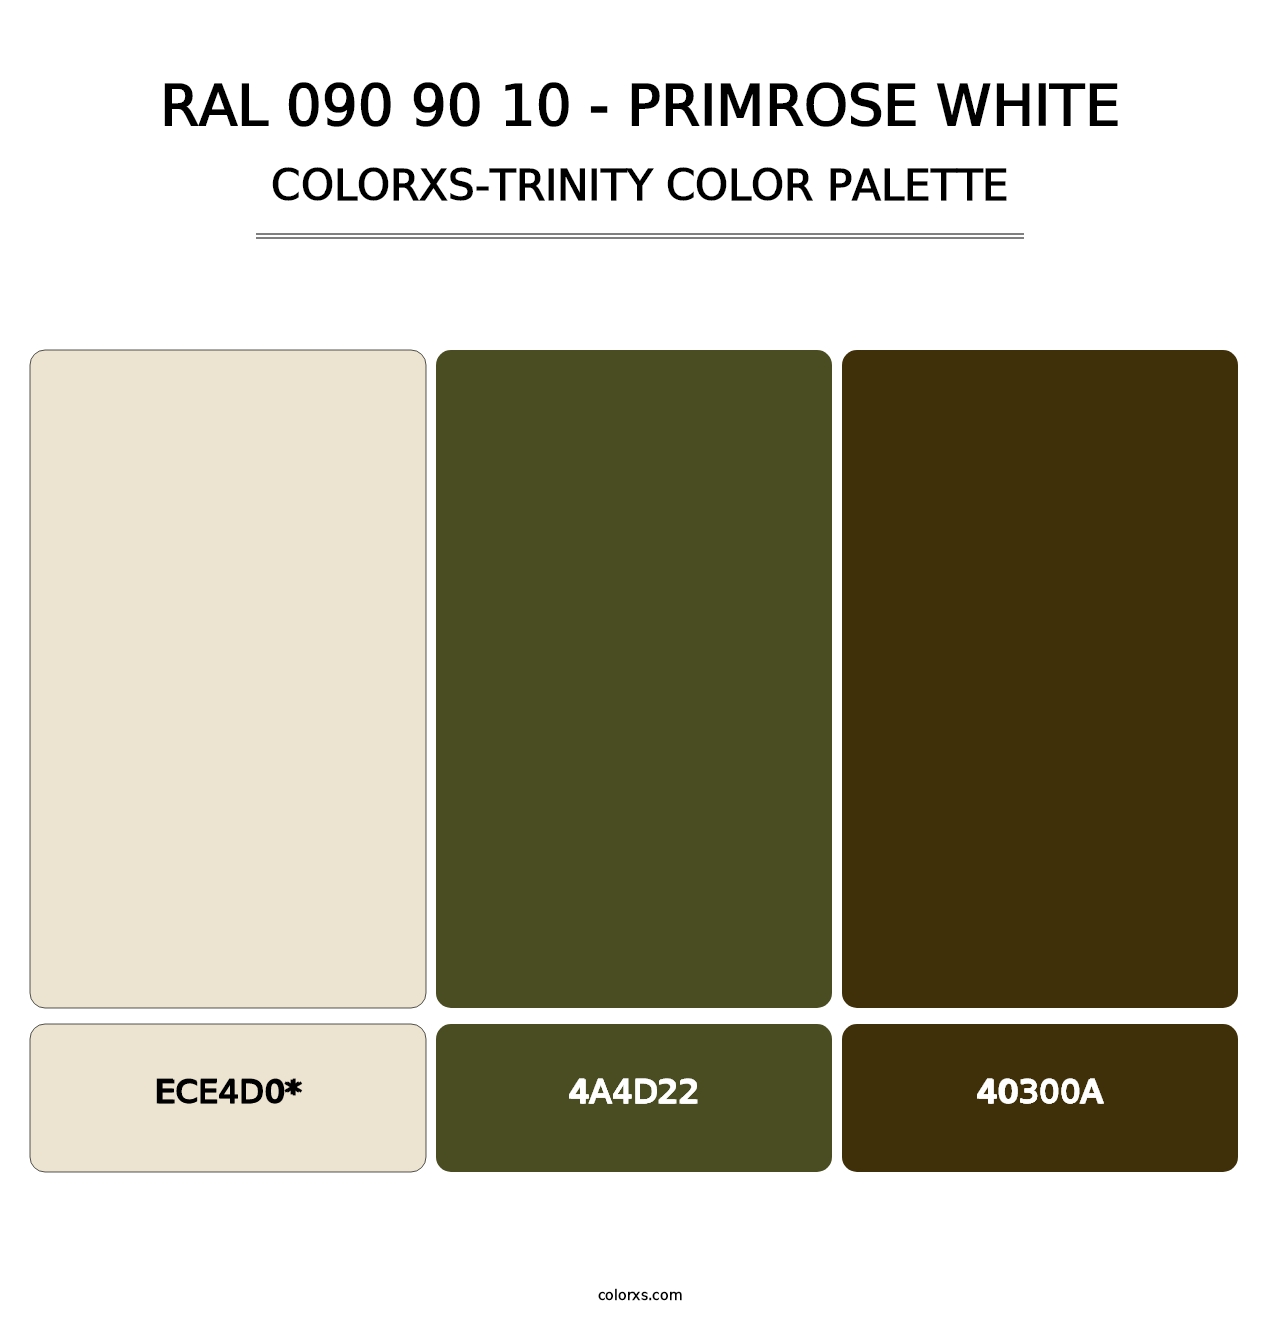 RAL 090 90 10 - Primrose White - Colorxs Trinity Palette